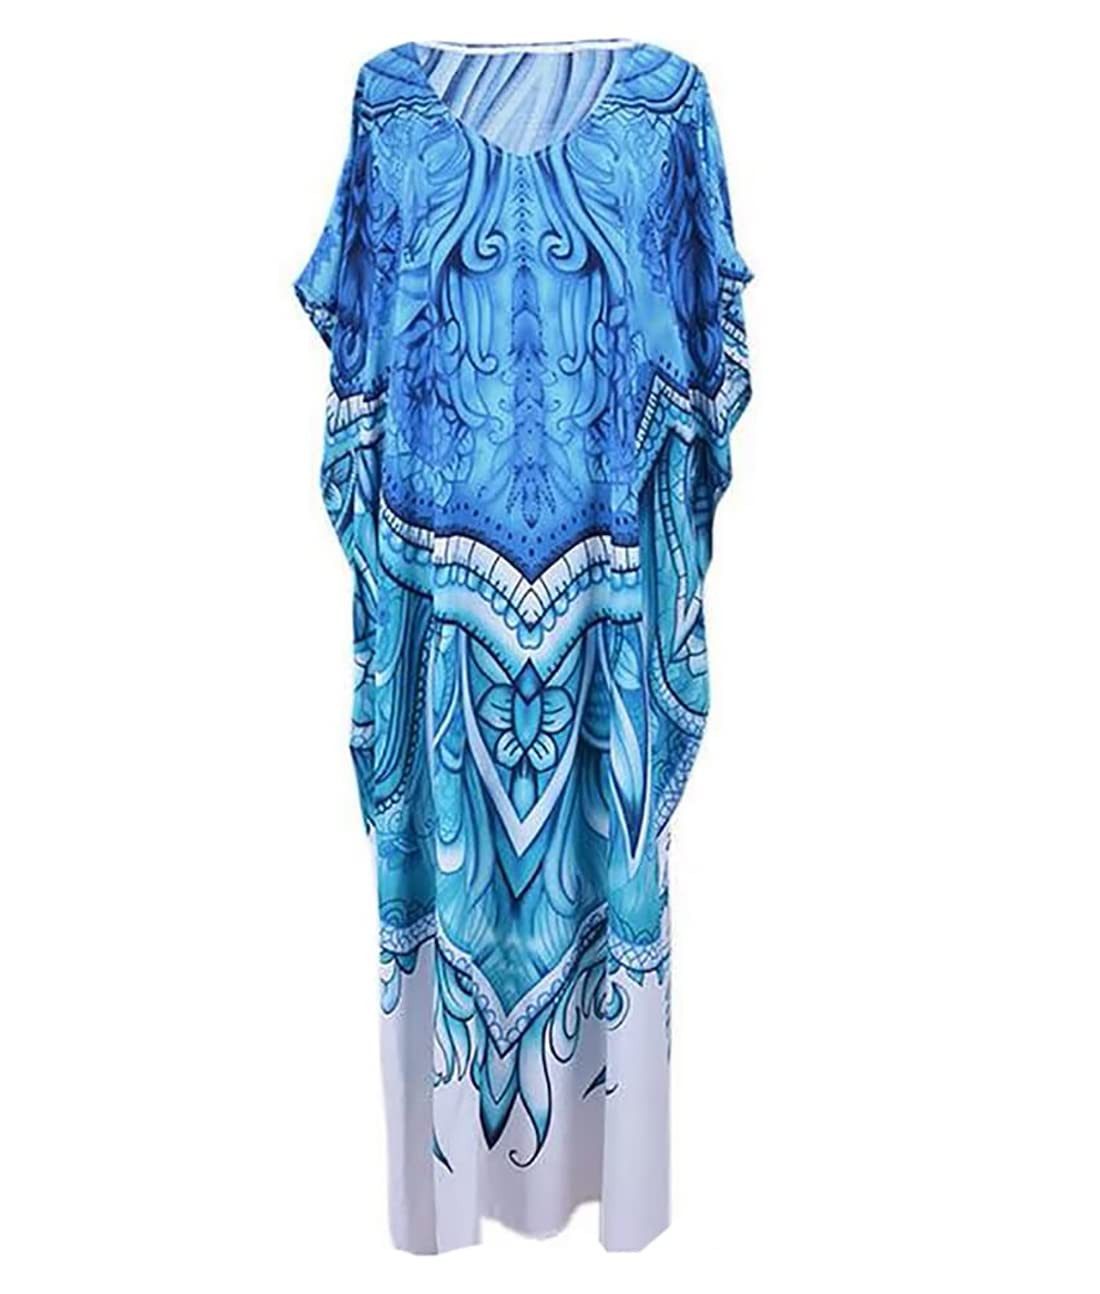 UE Stock Strandkleid Damen Kaftan lange Tunika Sommerkleid Strandkleid One Size Blau Weiß eleganter Boho-Chic Look